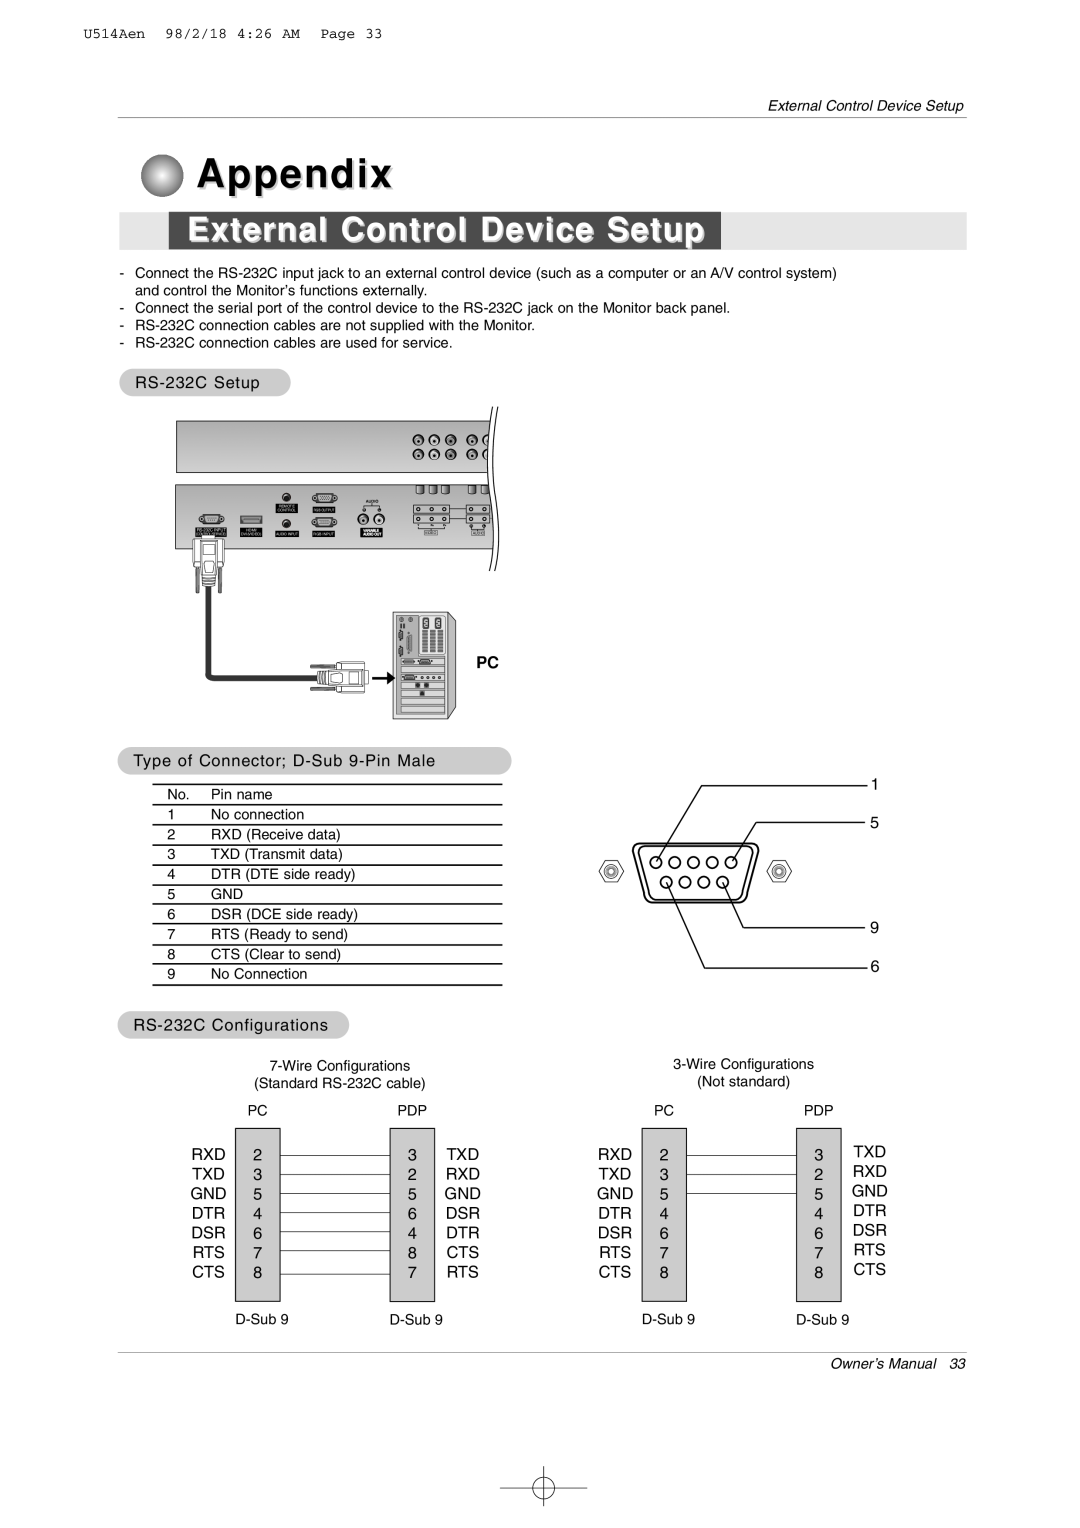 LG Electronics 42PM1M owner manual External Control Device Setup, Appendix 